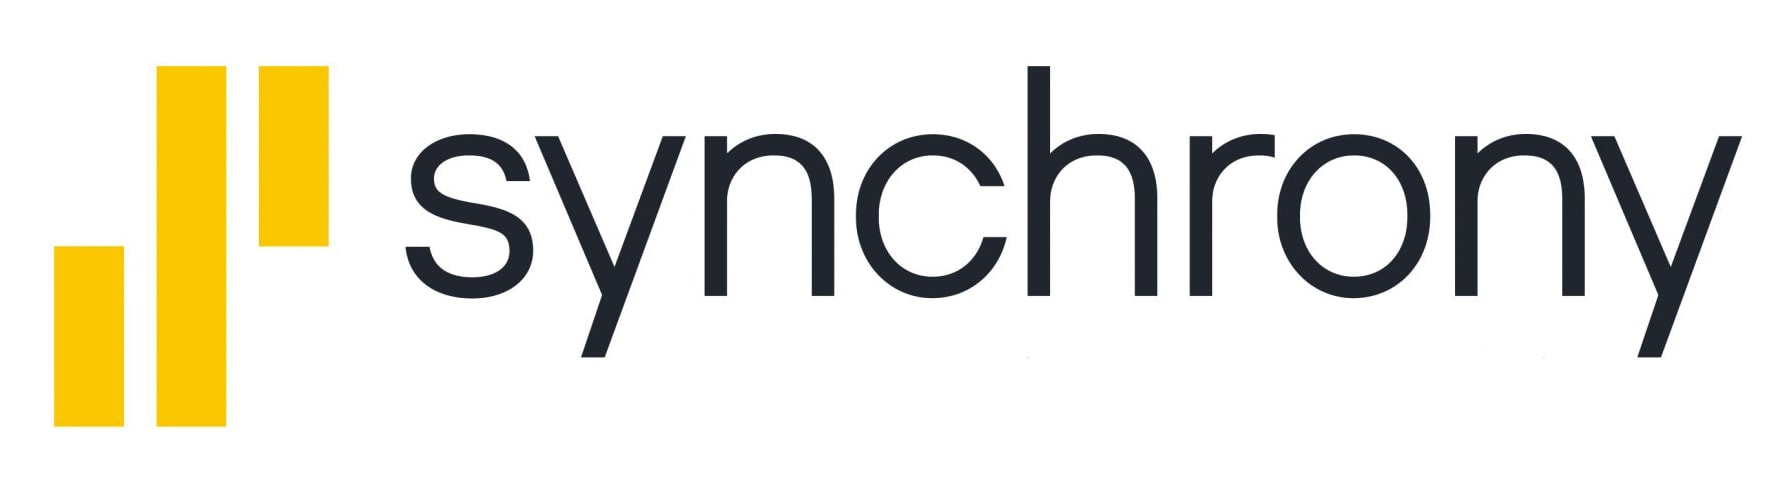 Synchrony-Logo-gold-charcoal (1)